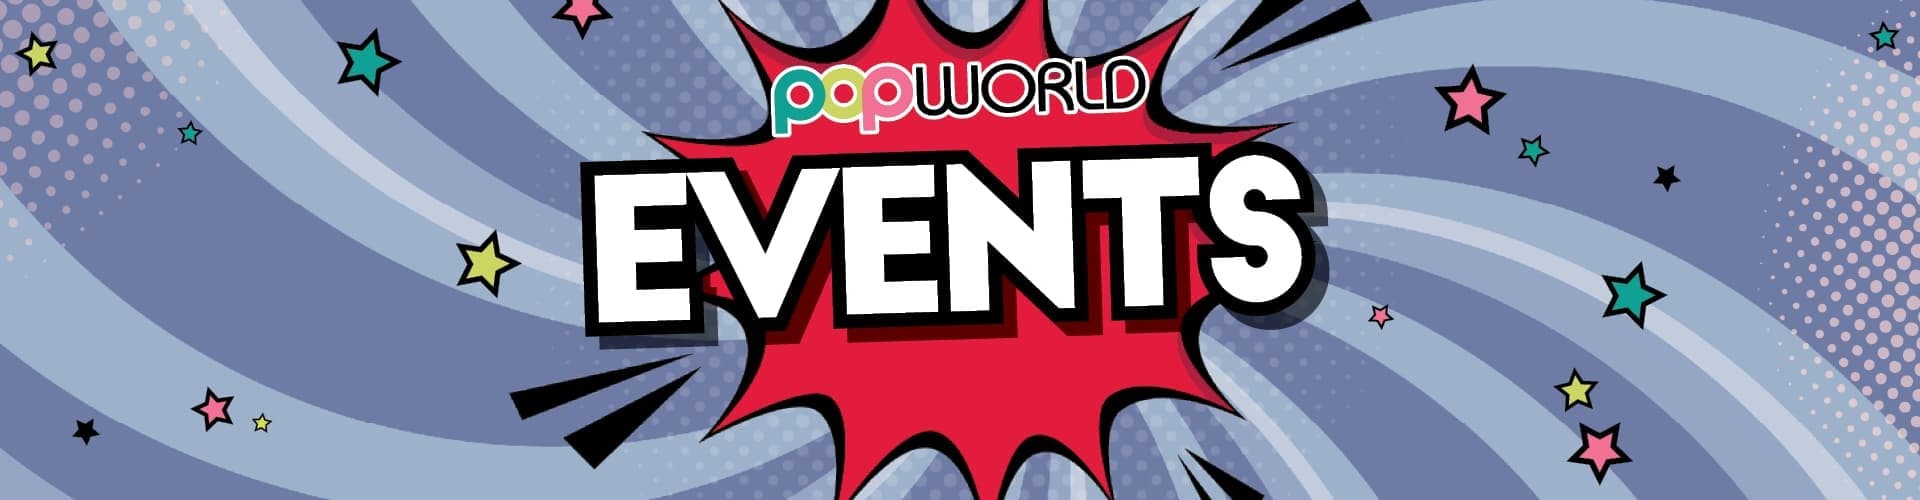 Events at Popworld Chelmsford